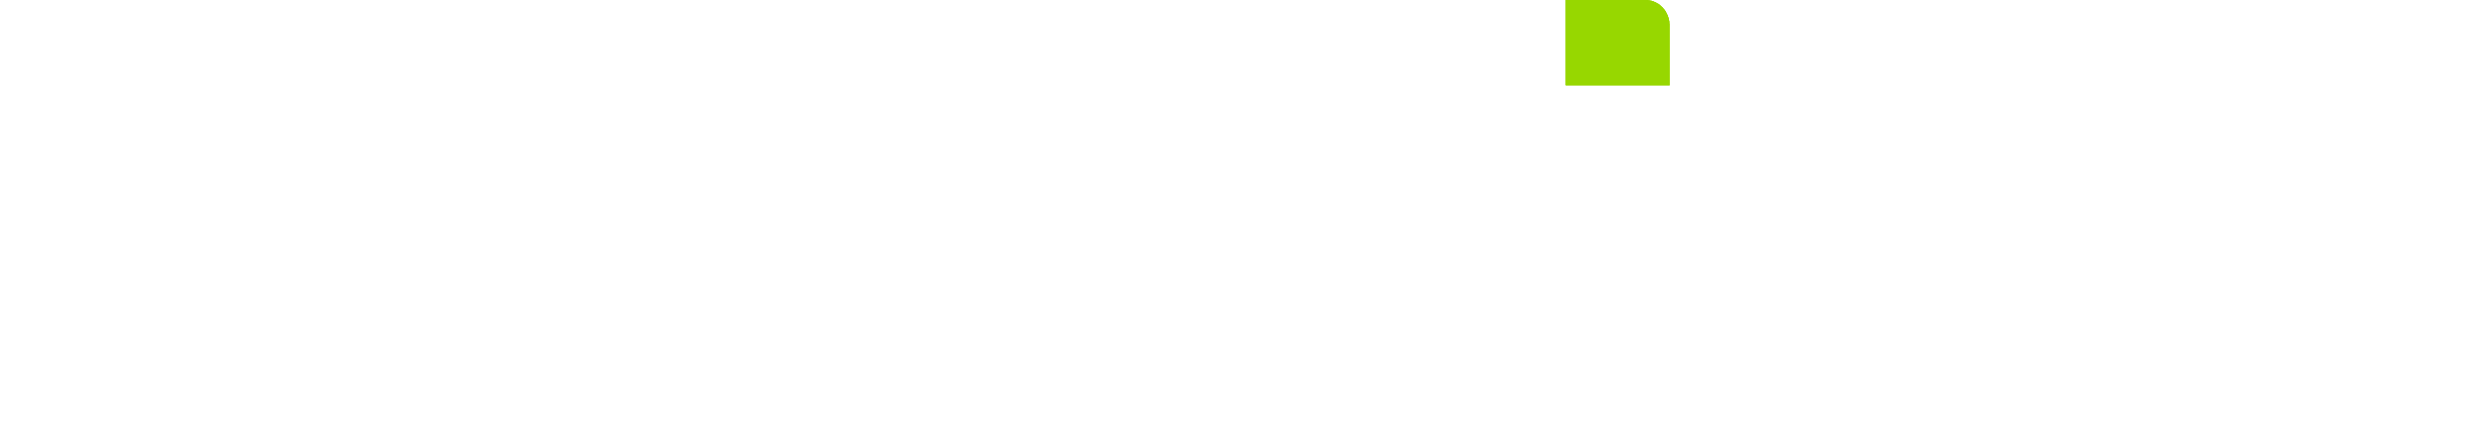 loadlink-logo